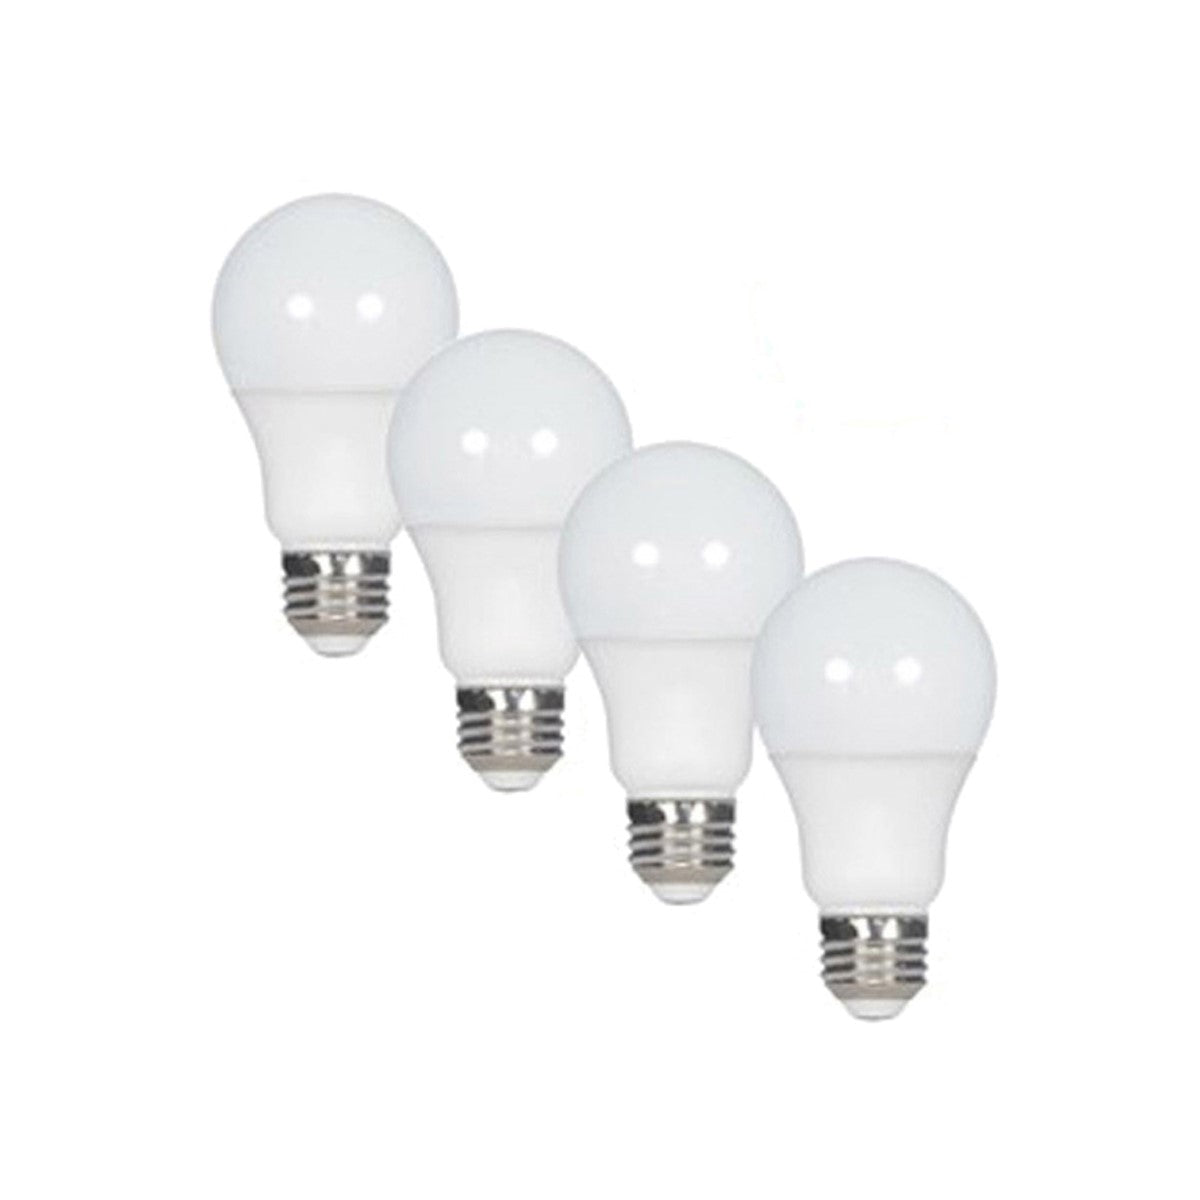 A19 LED Bulb, 75W Equivalent, 13 Watt, 1050 Lumens, 4000K, E26 Medium Base, Frosted Finish, Pack Of 4